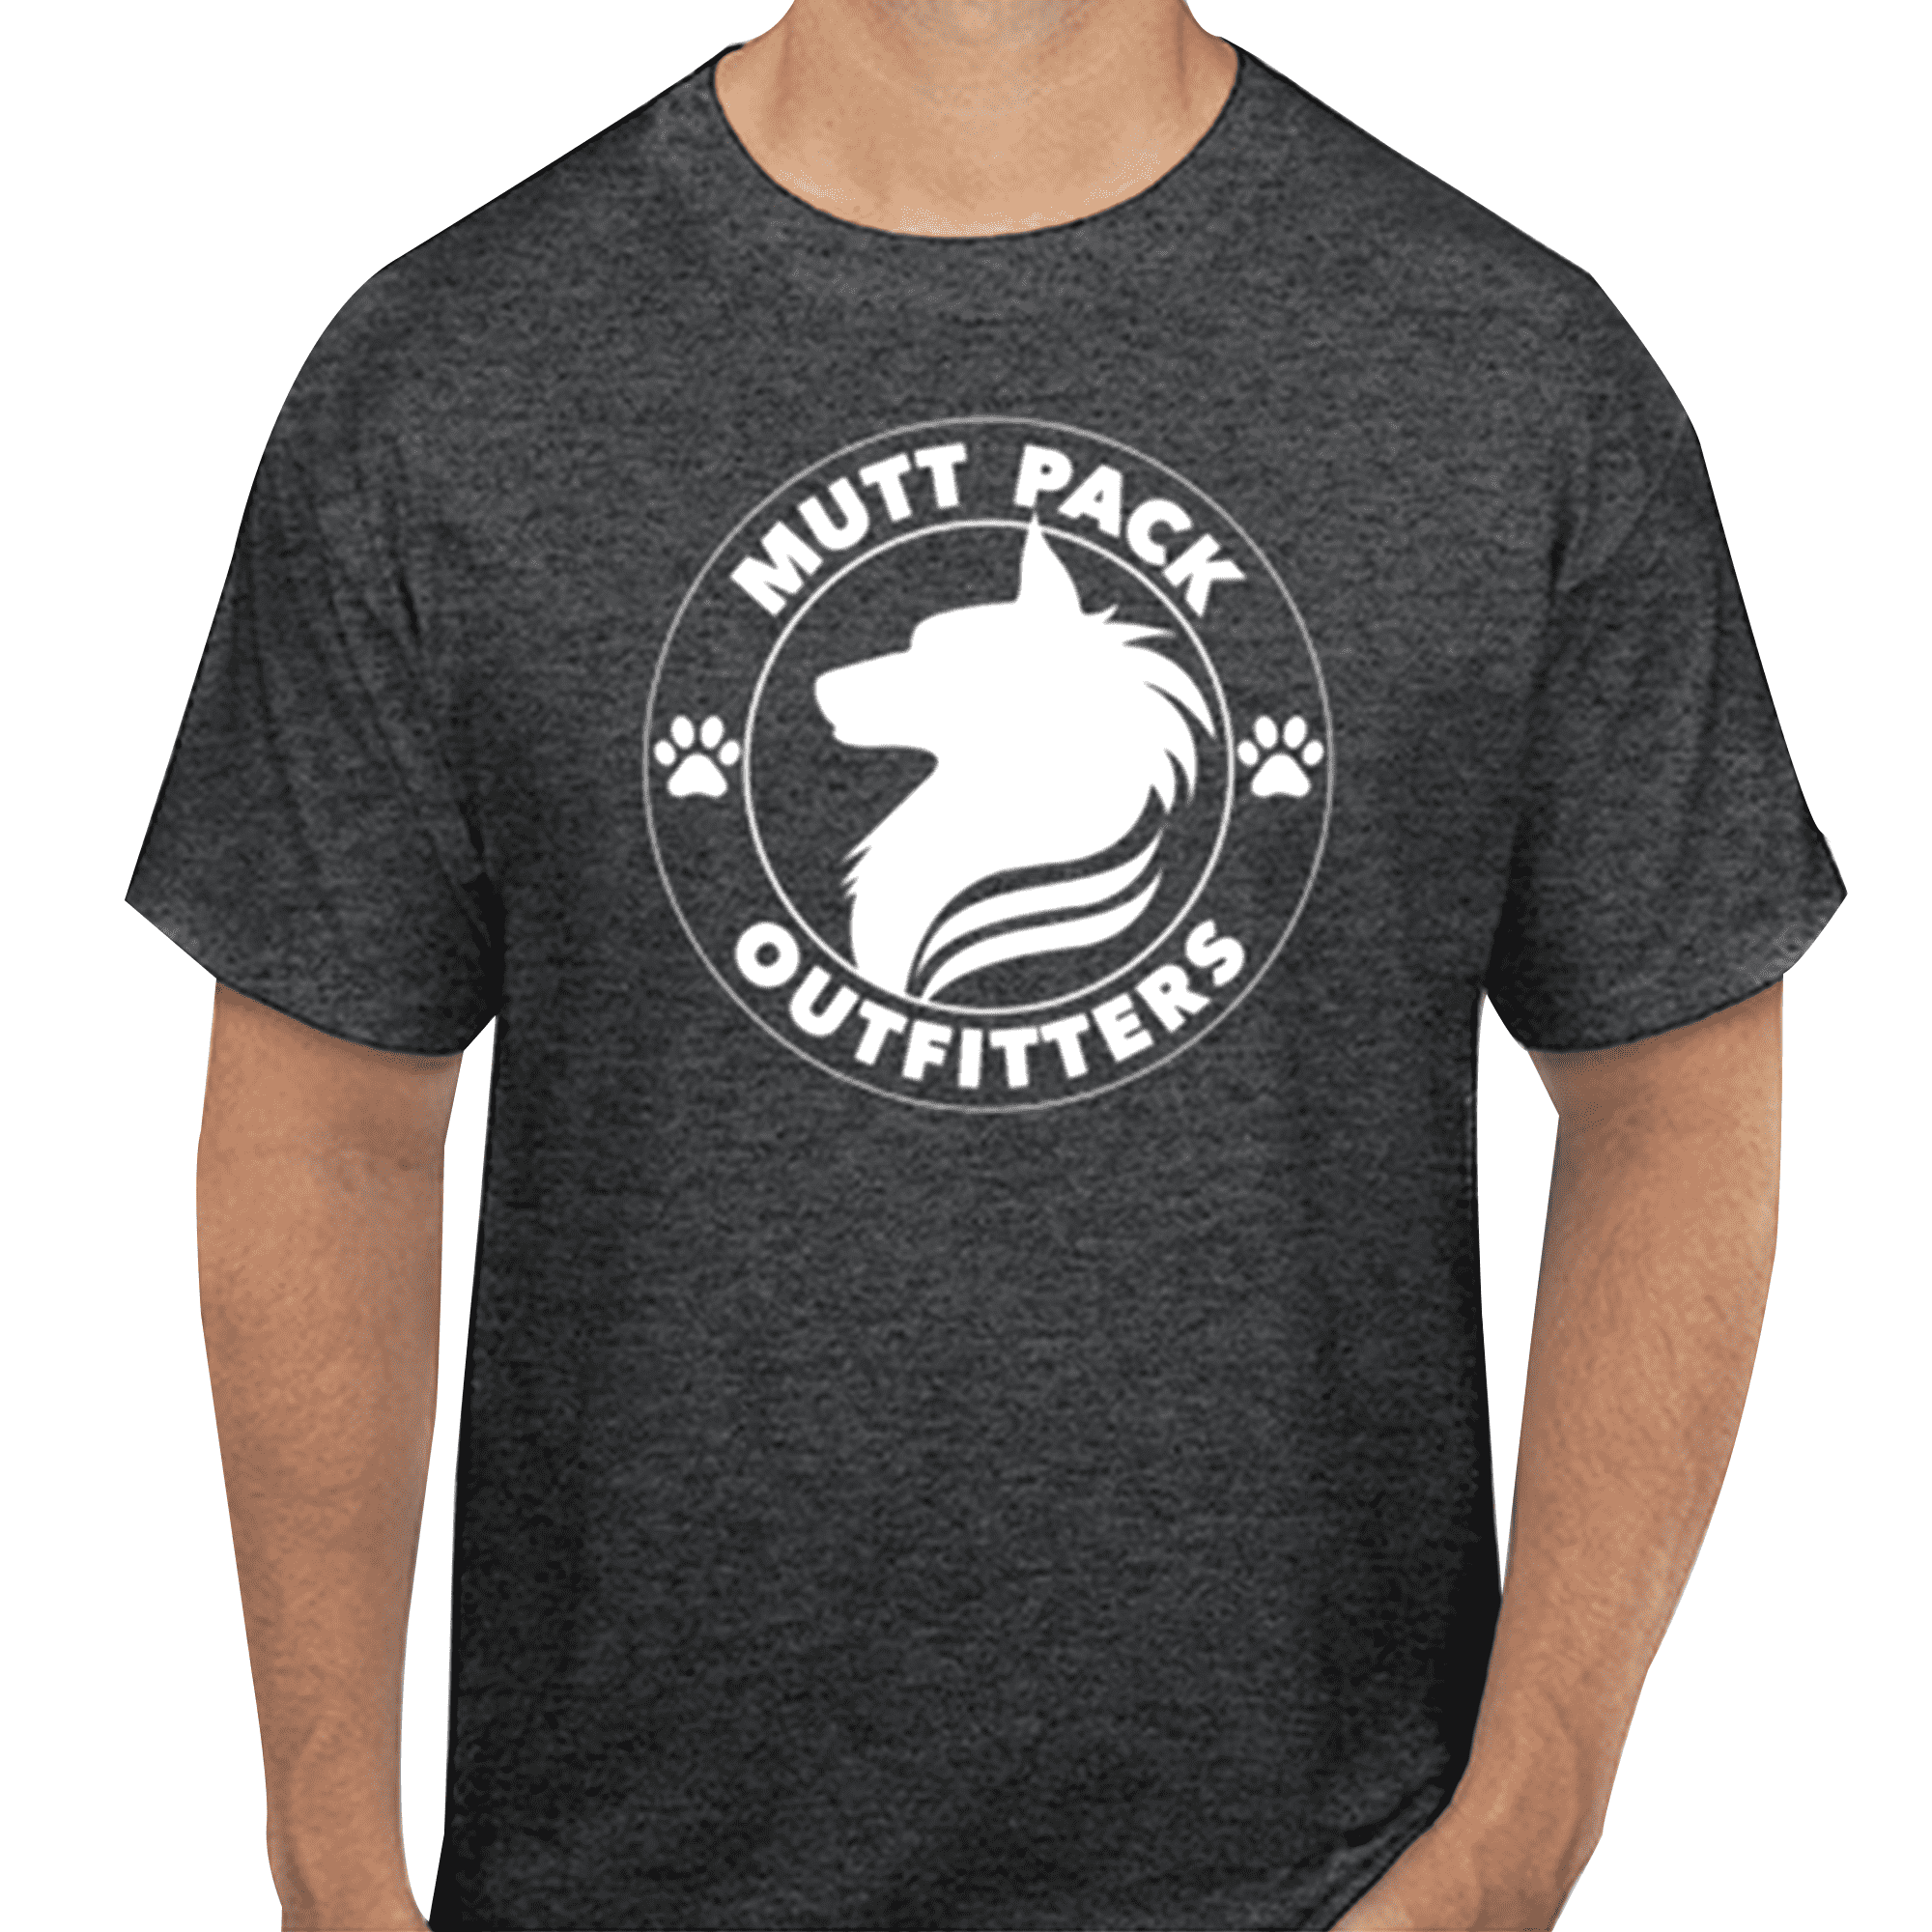 Mutt Pack T-Shirt (Charcoal) Attire - Mutt Pack Outfitters 